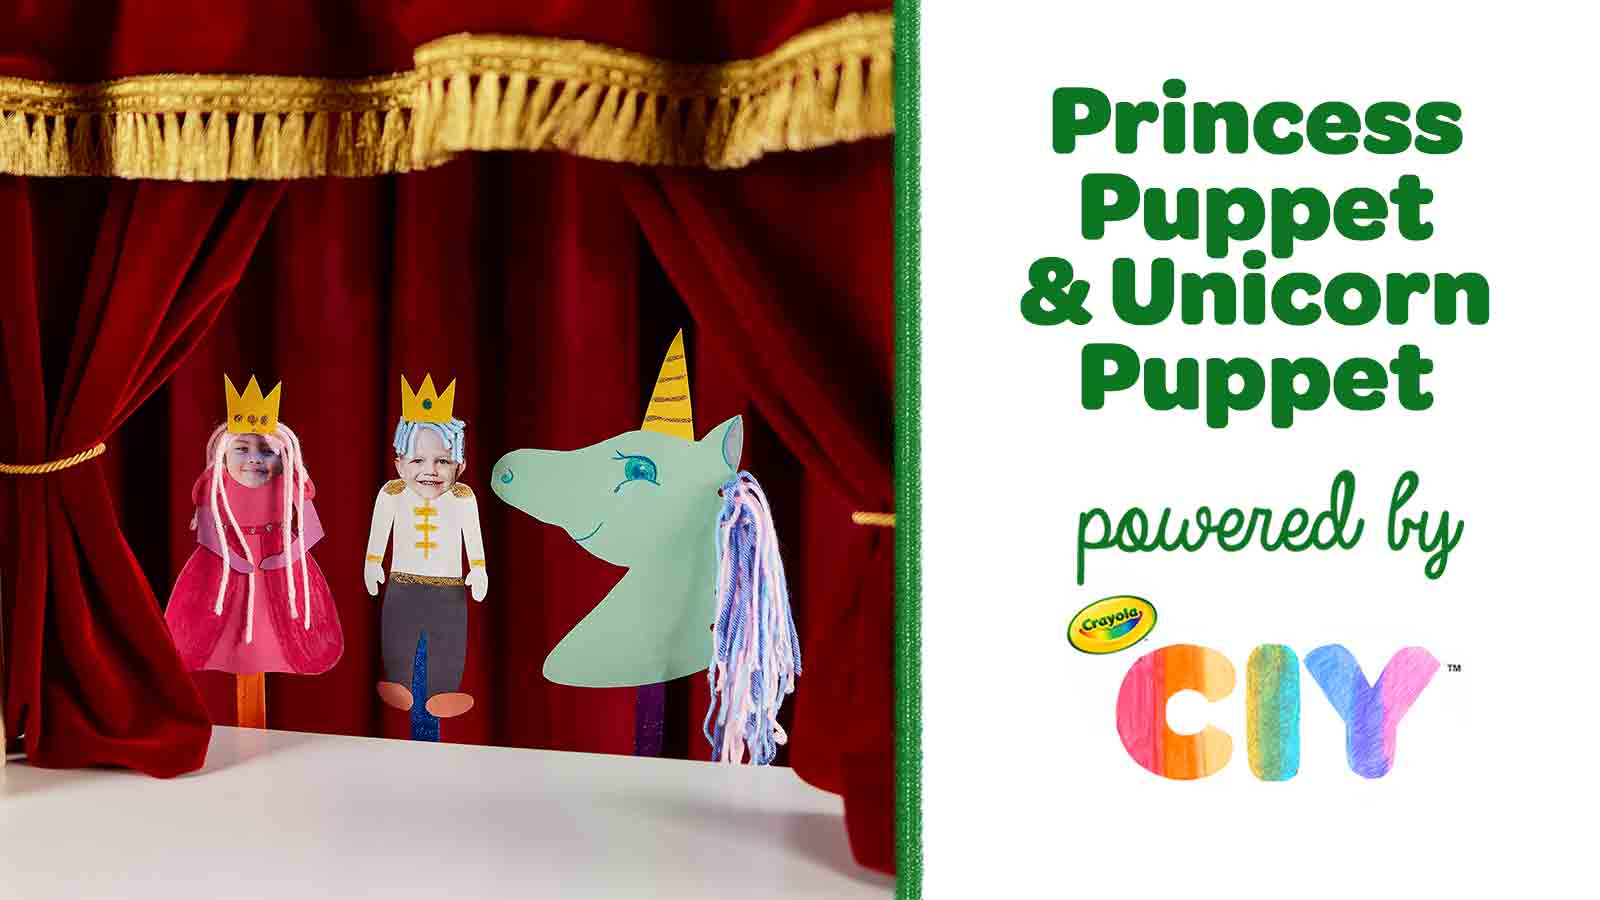 Princess-Unicorn-Puppet_Poster-Frame